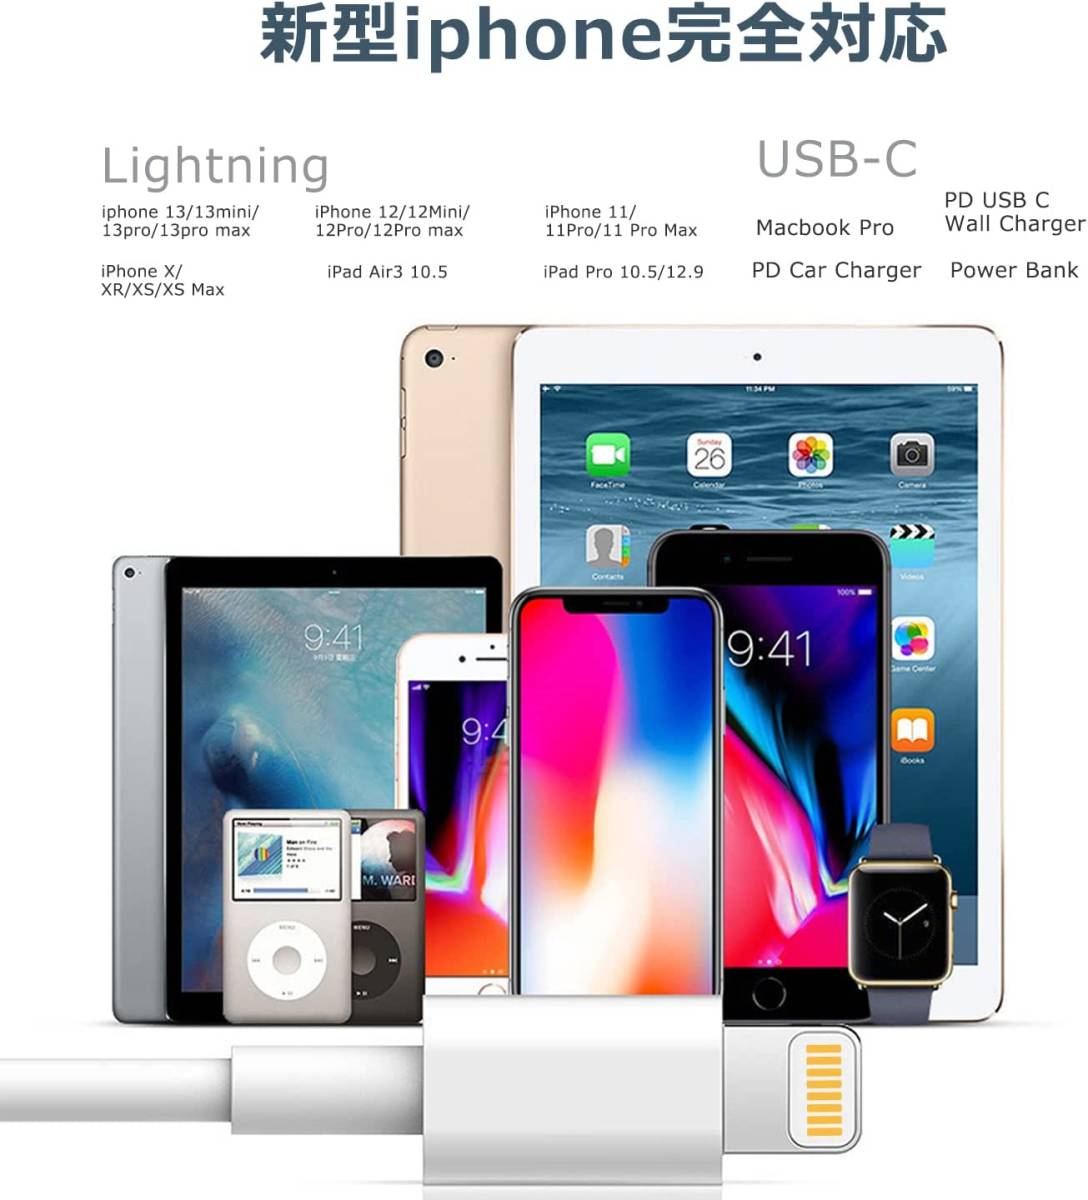 USB-C Lightningケーブル タイプC iphone 充電ケーブル ライトニングケーブル